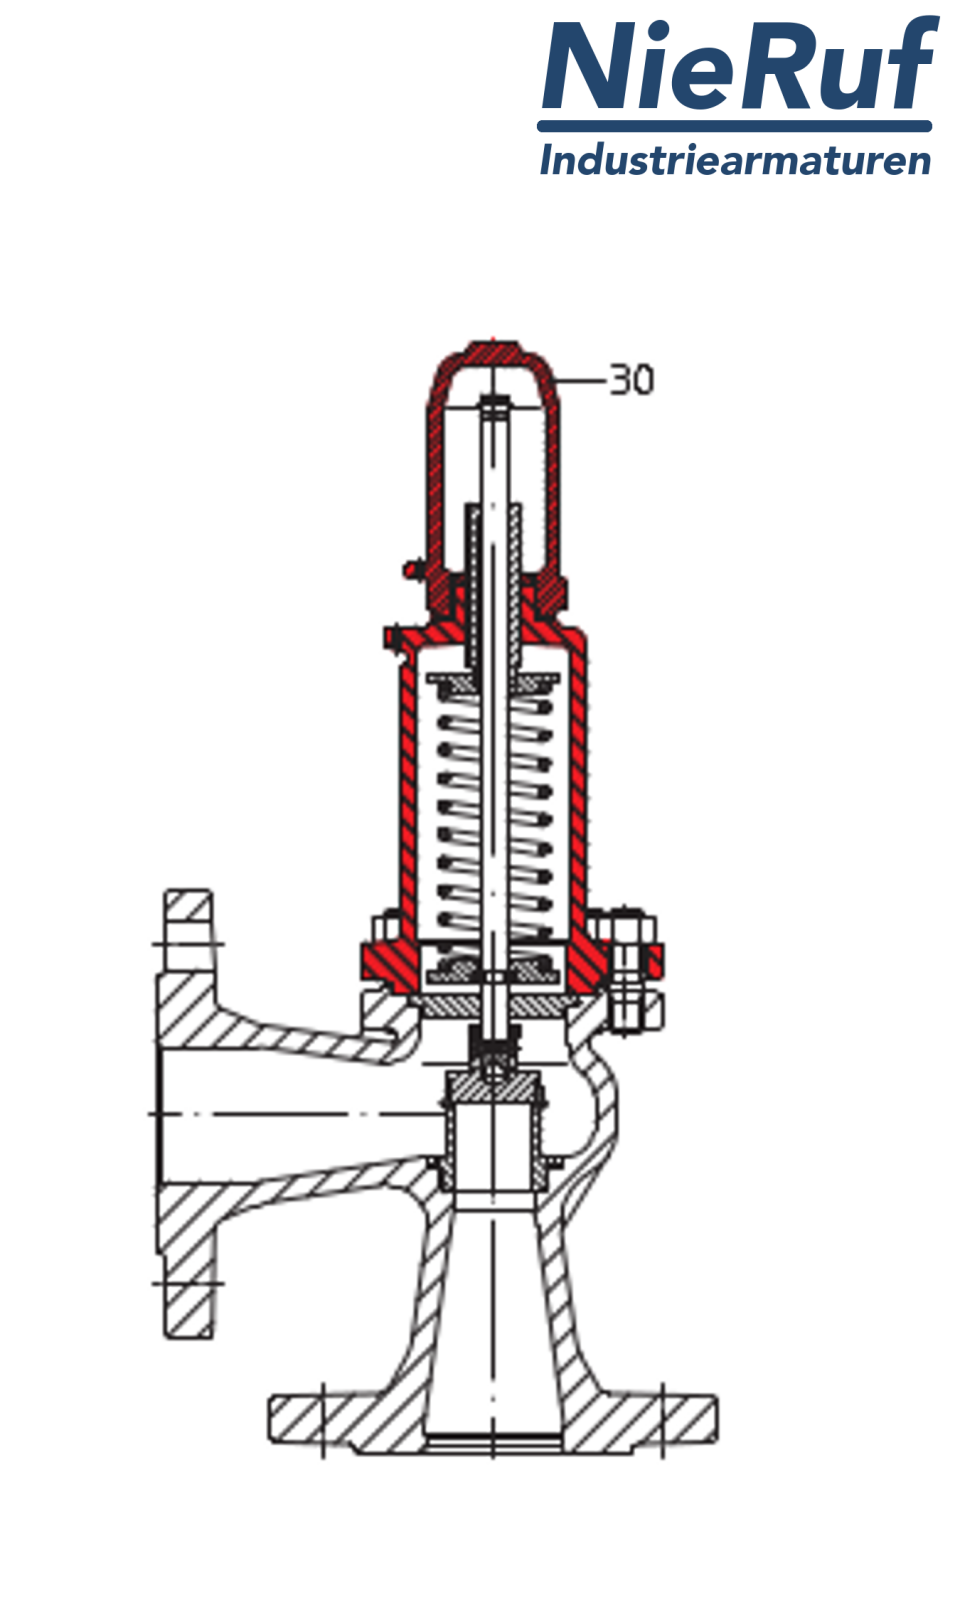 flange-safety valve DN15/DN15 SF0101, cast iron EN-JL1040 metal, without lever